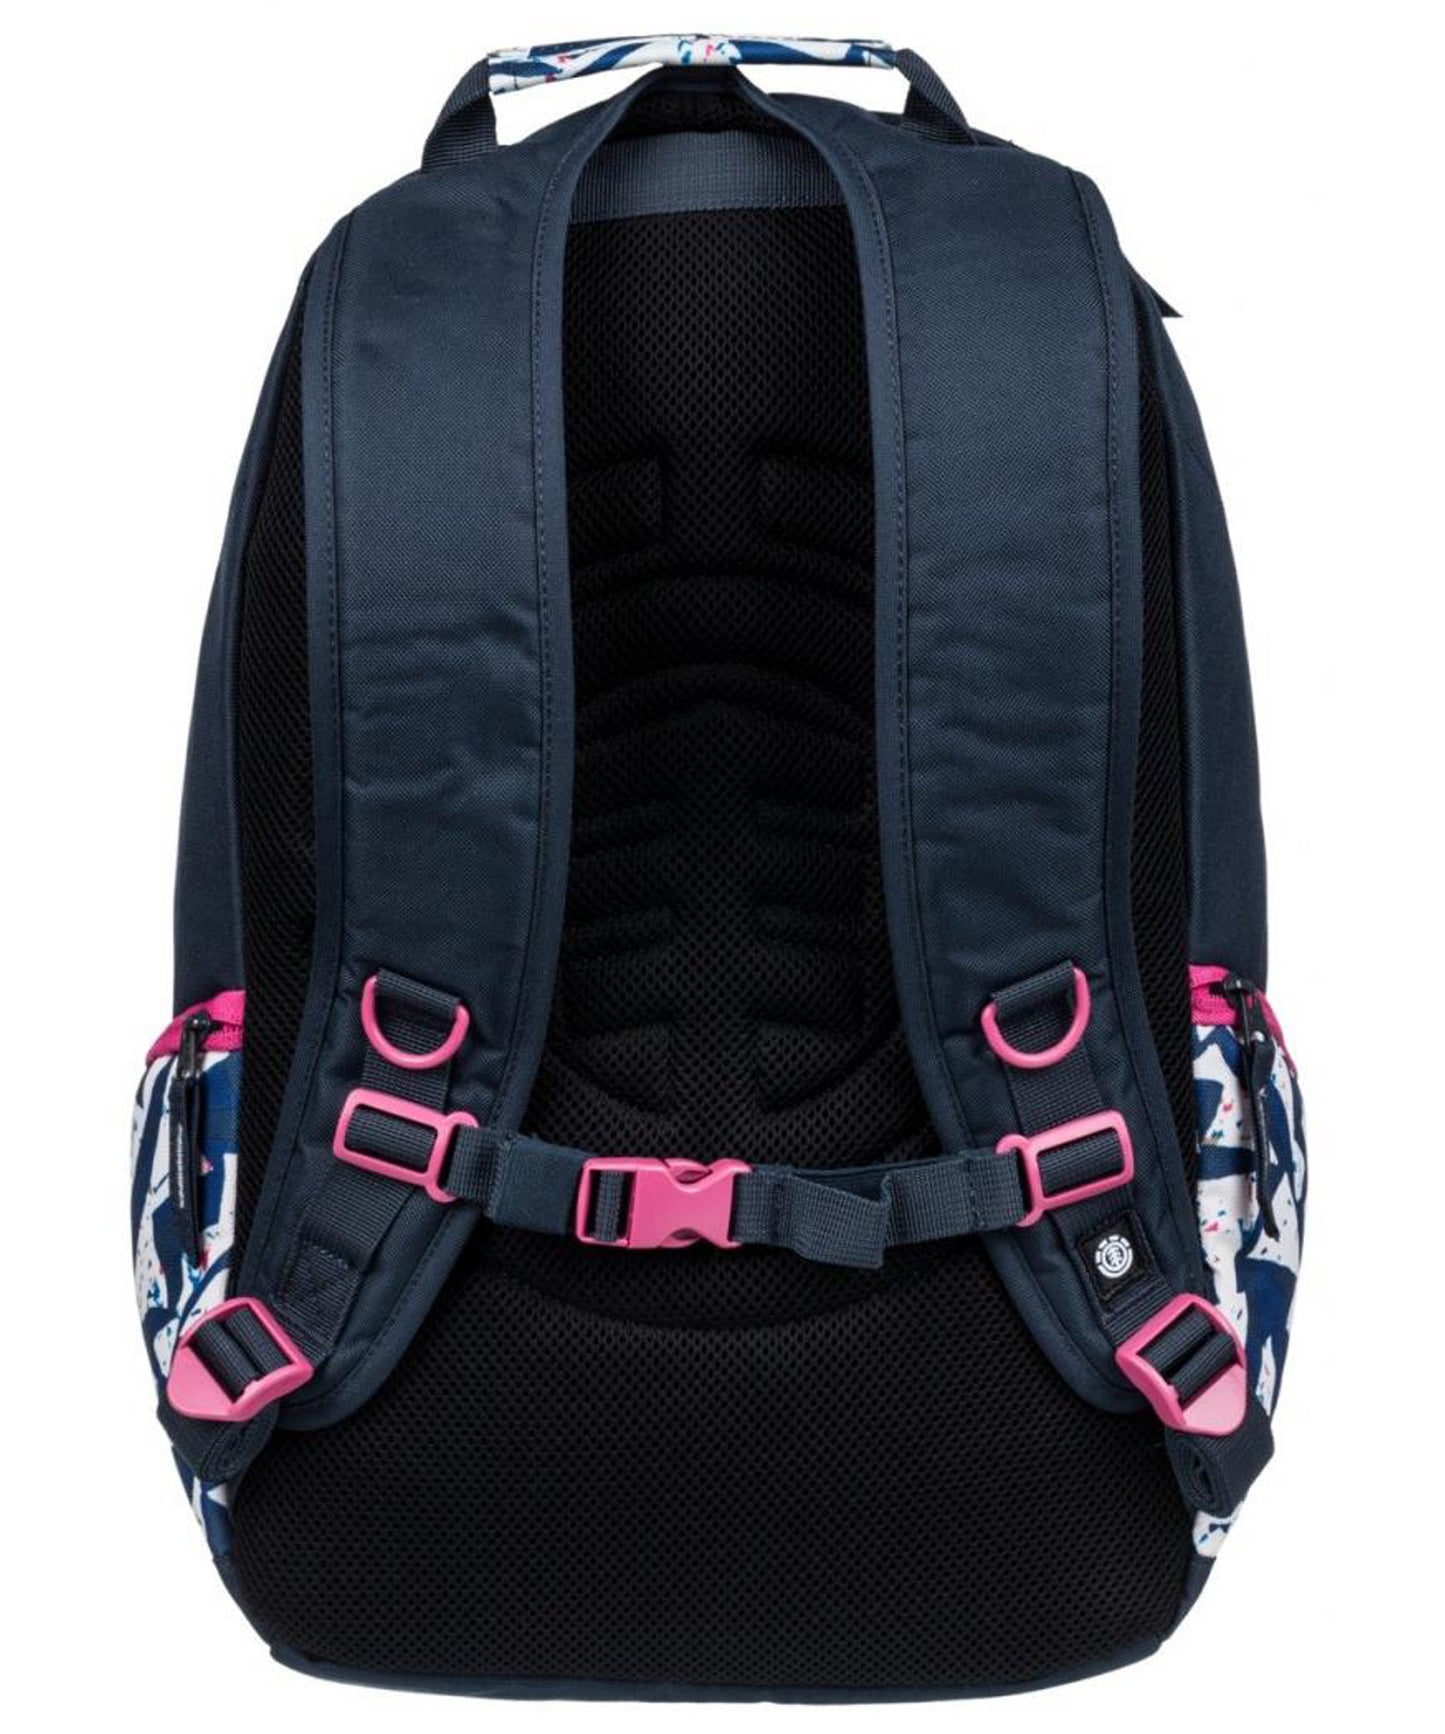 element-mochila-mohave-blue ridge-30l.-abrazaderas para llevar skate-varios bolsillos-impermeable.-cierres de cremallera.